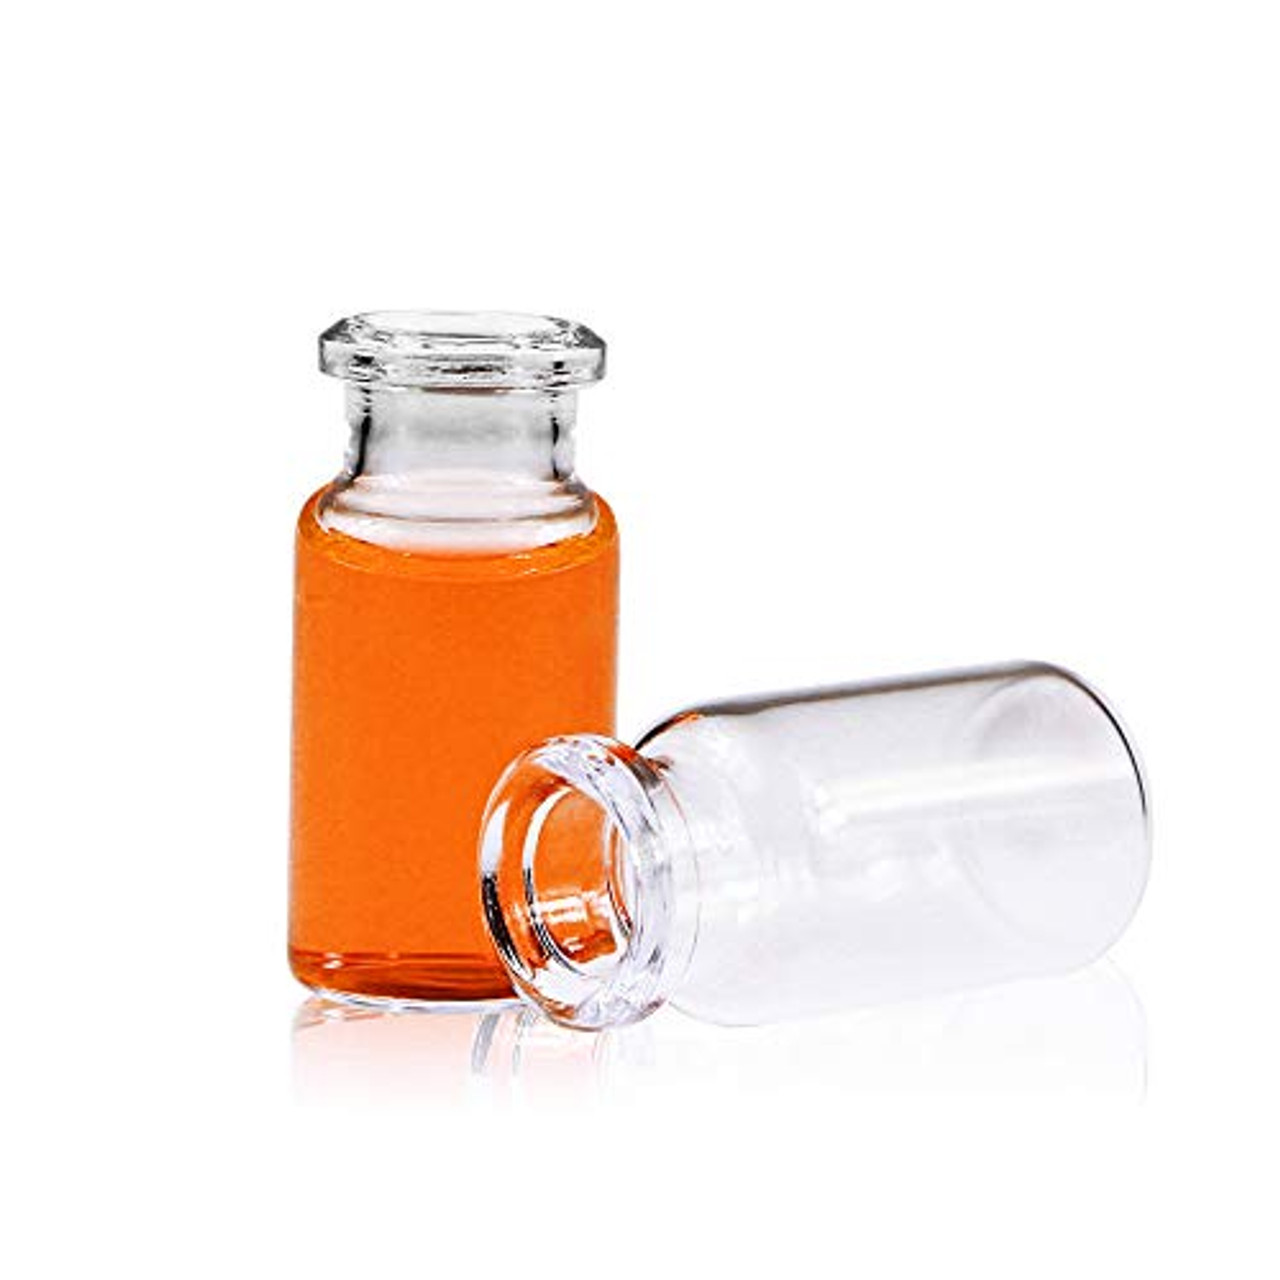 6ml Round Glass Concentrate Jar w/ Silicone Lids - Orange Lids